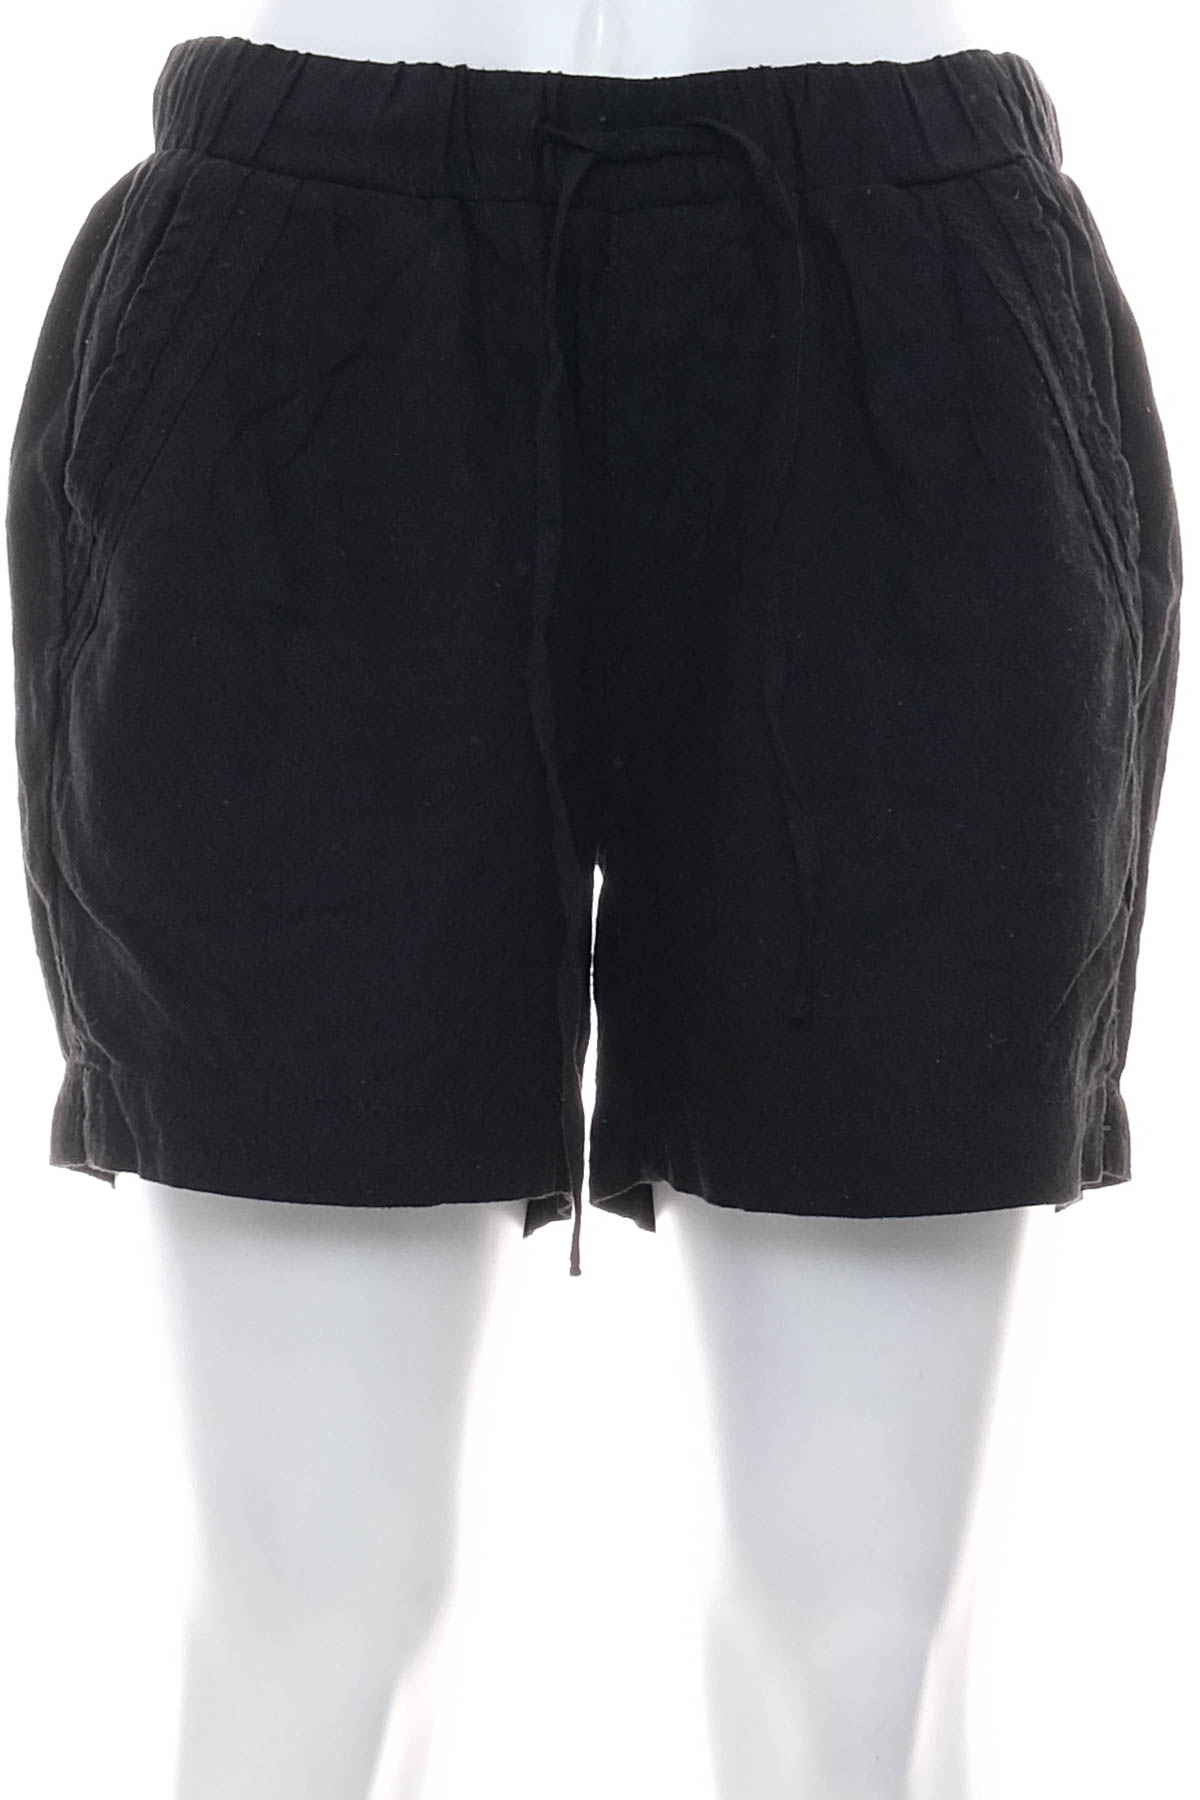 Female shorts - BRIGGS NEW YORK - 0